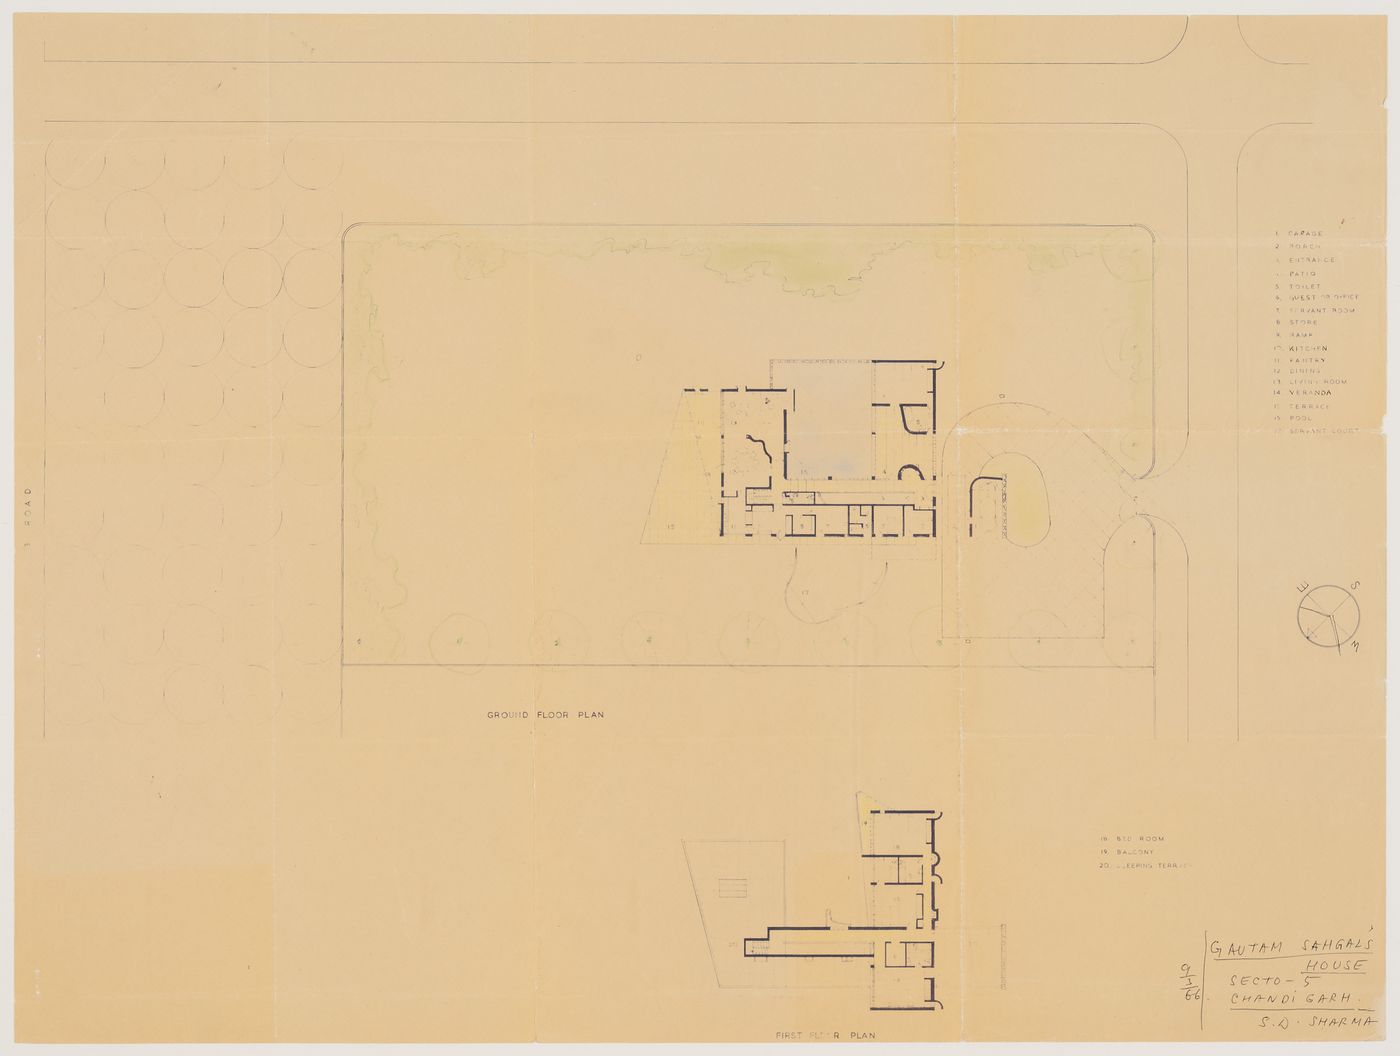 Plans for Gautam Sahgal's house, Chandigarh, India